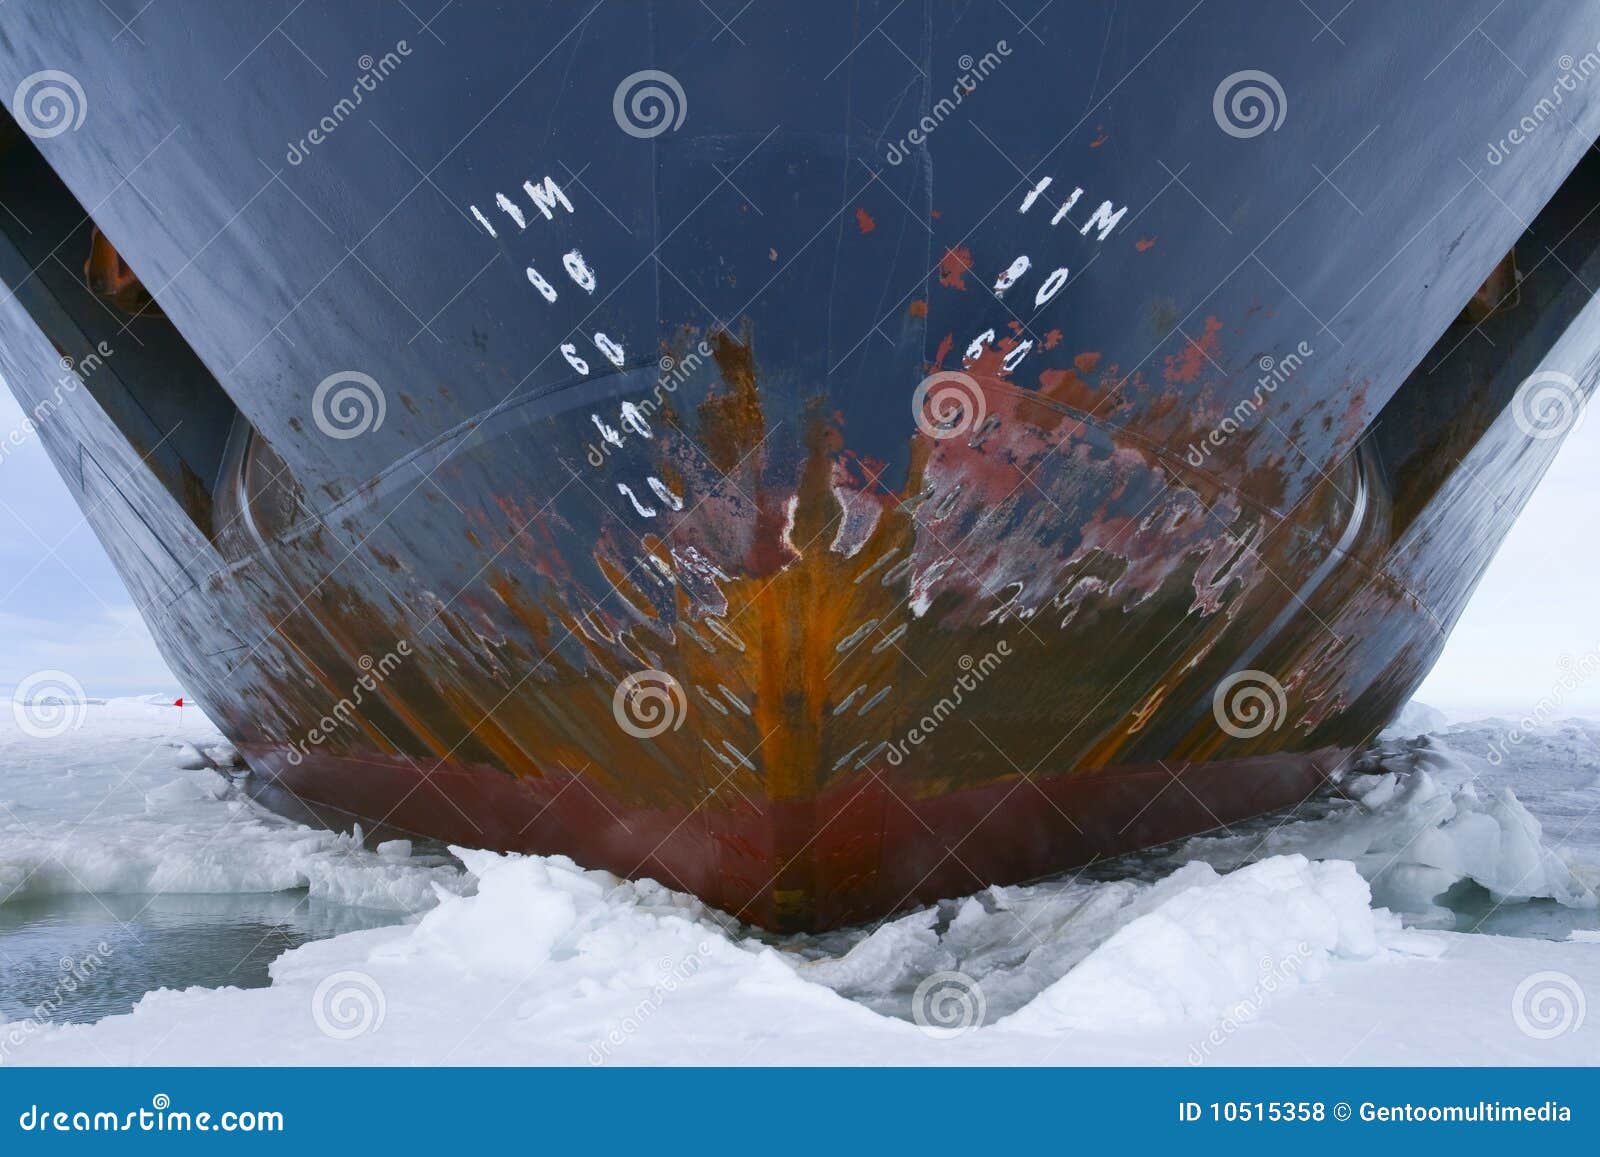 hull of an icebreaker